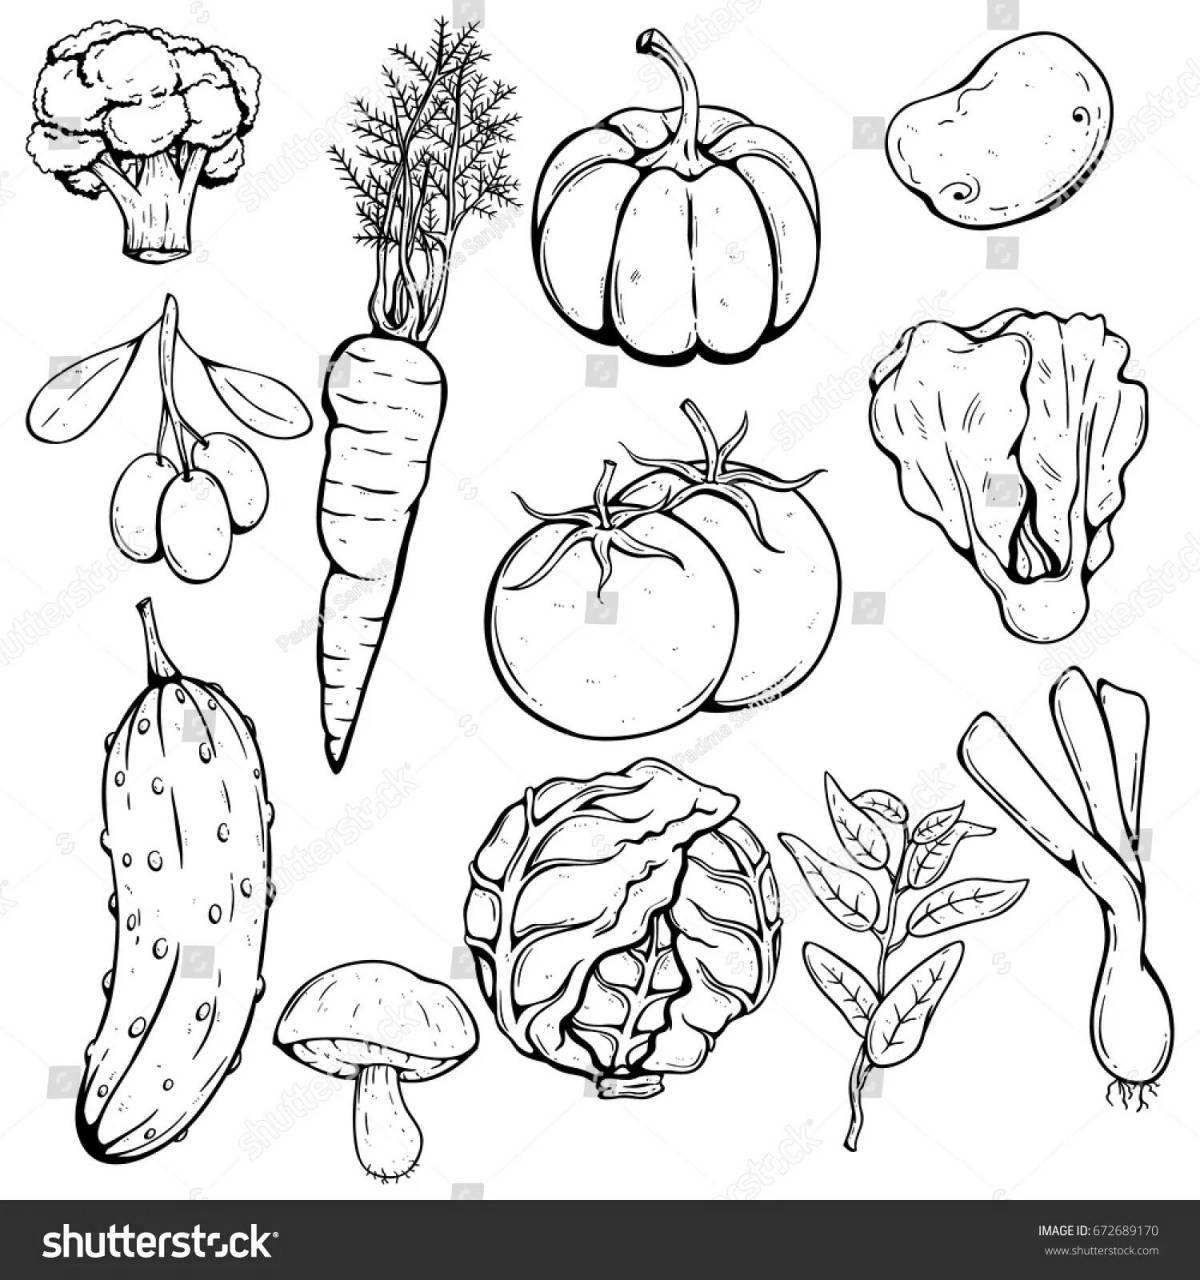 Attractive vegetable vinaigrette coloring book